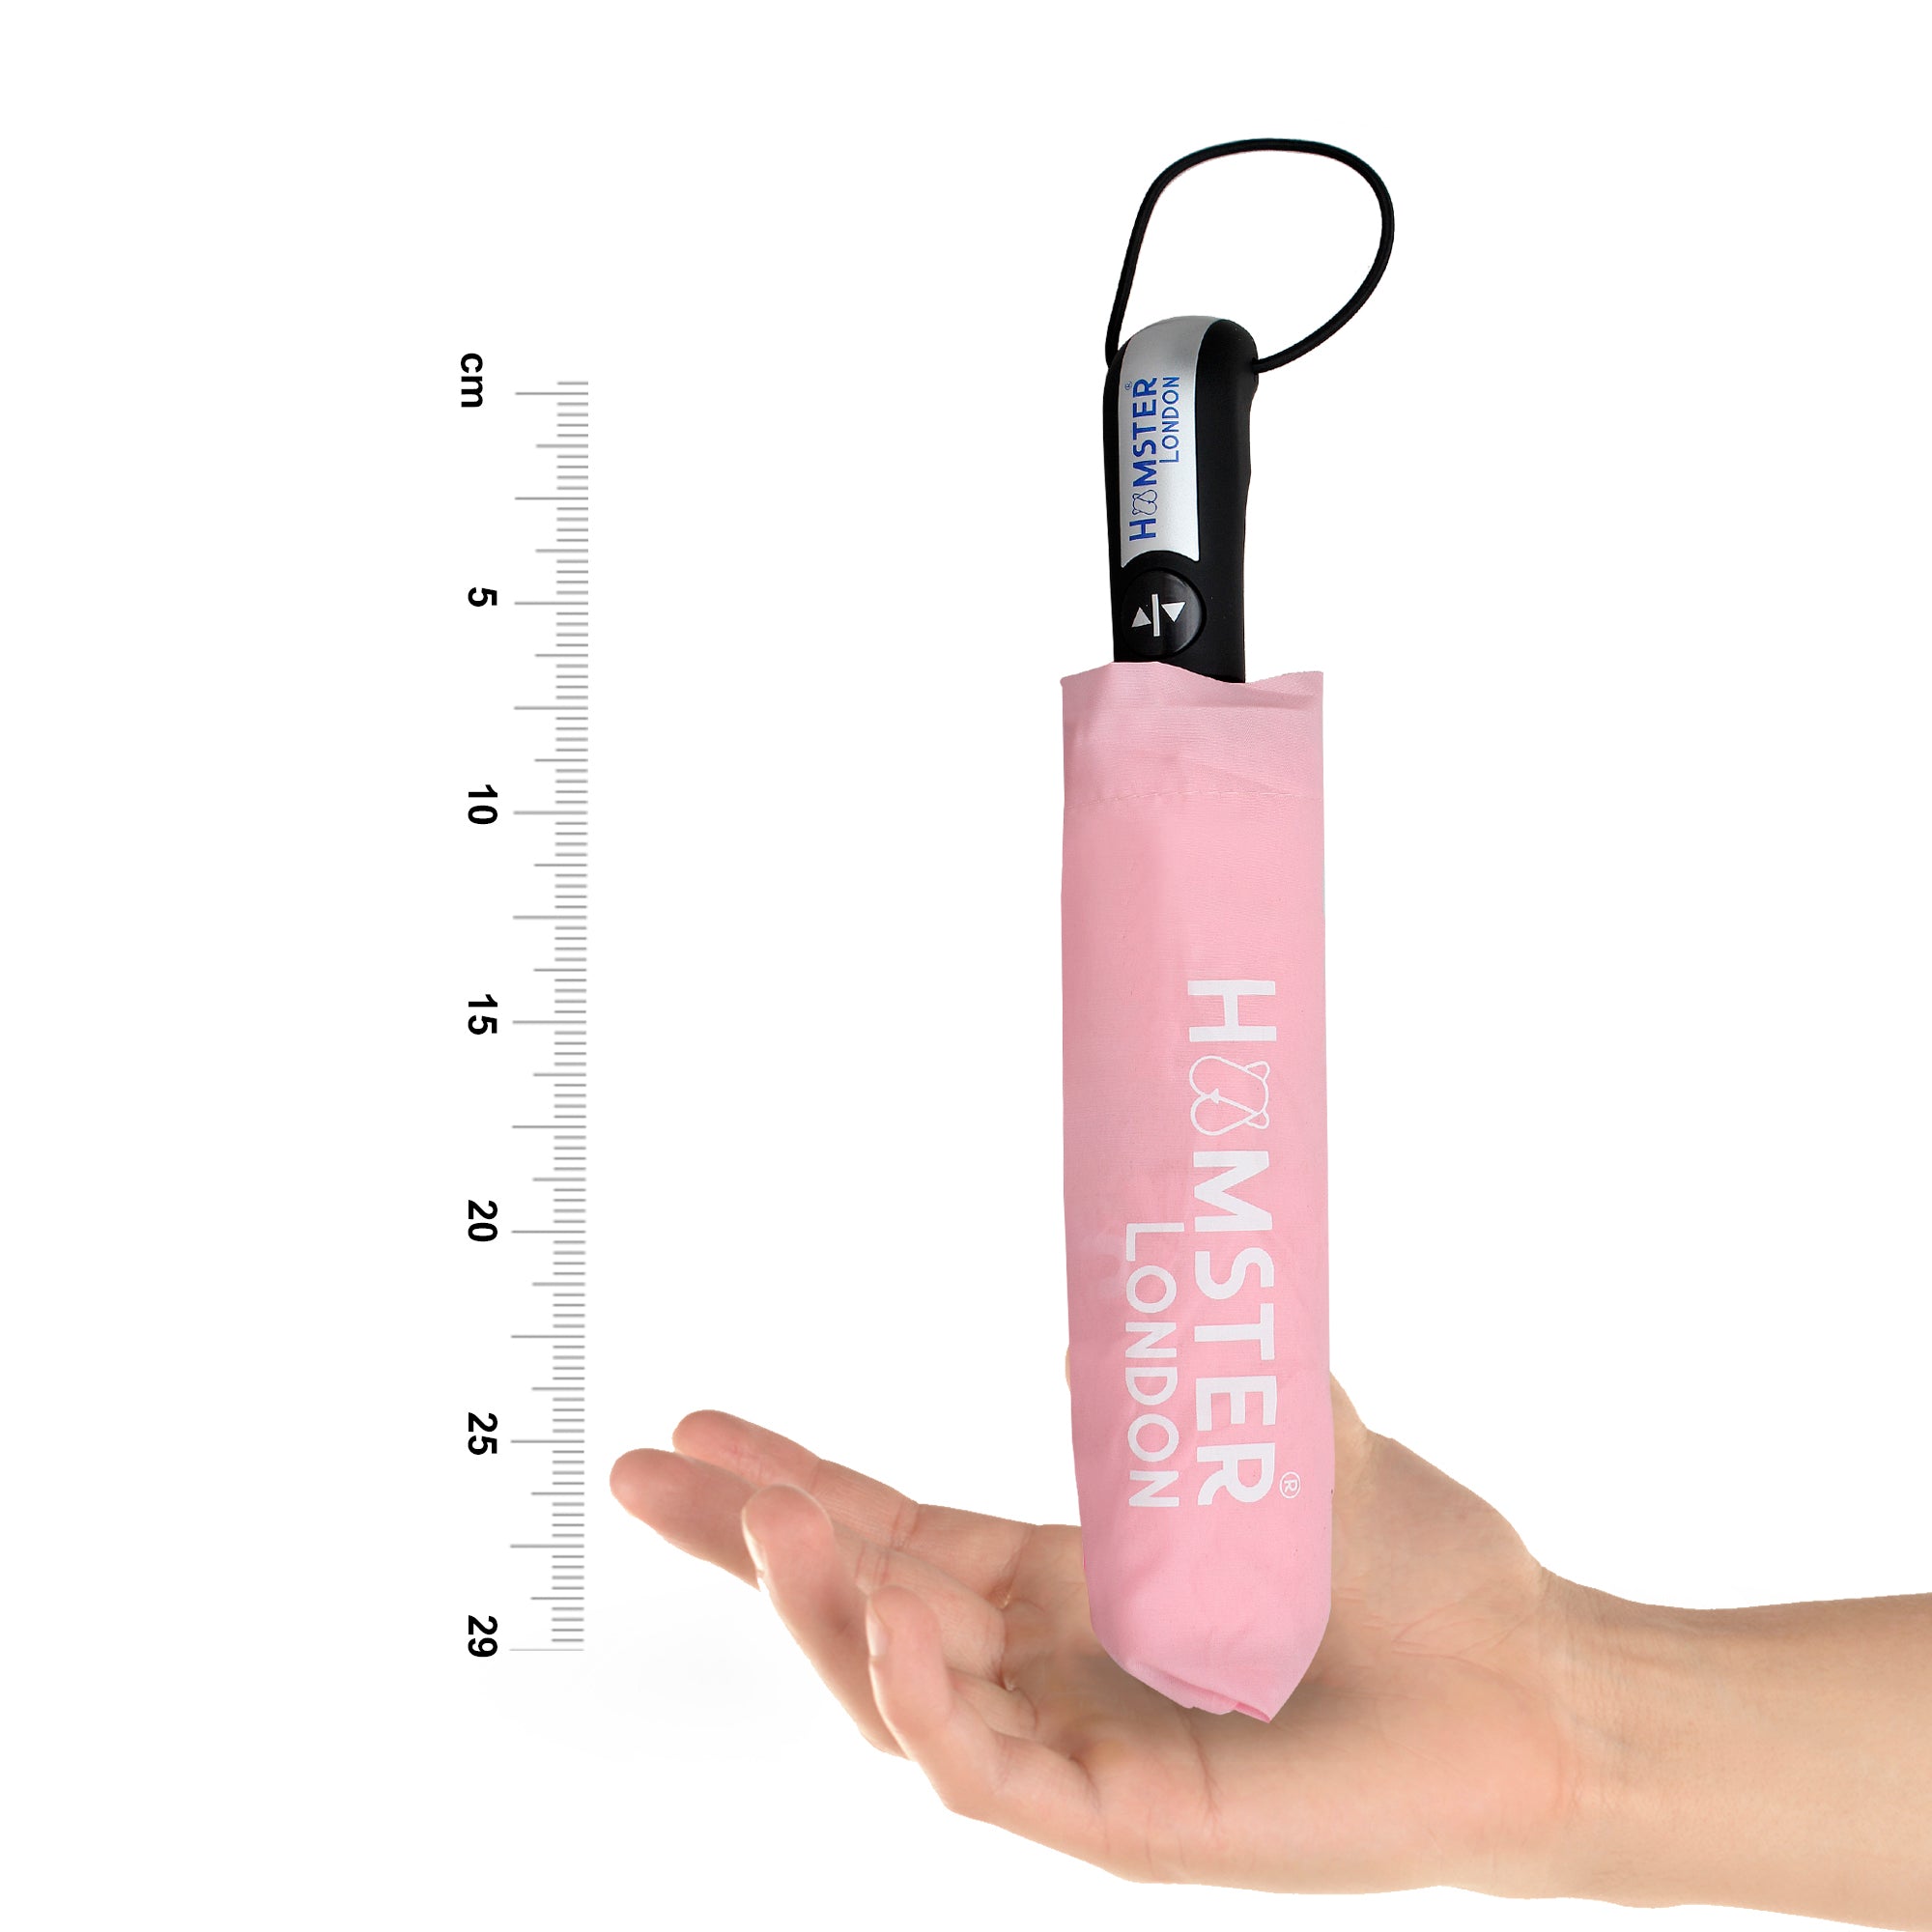 Automatic Open & Close Pocket Folding Umbrella (Pink)